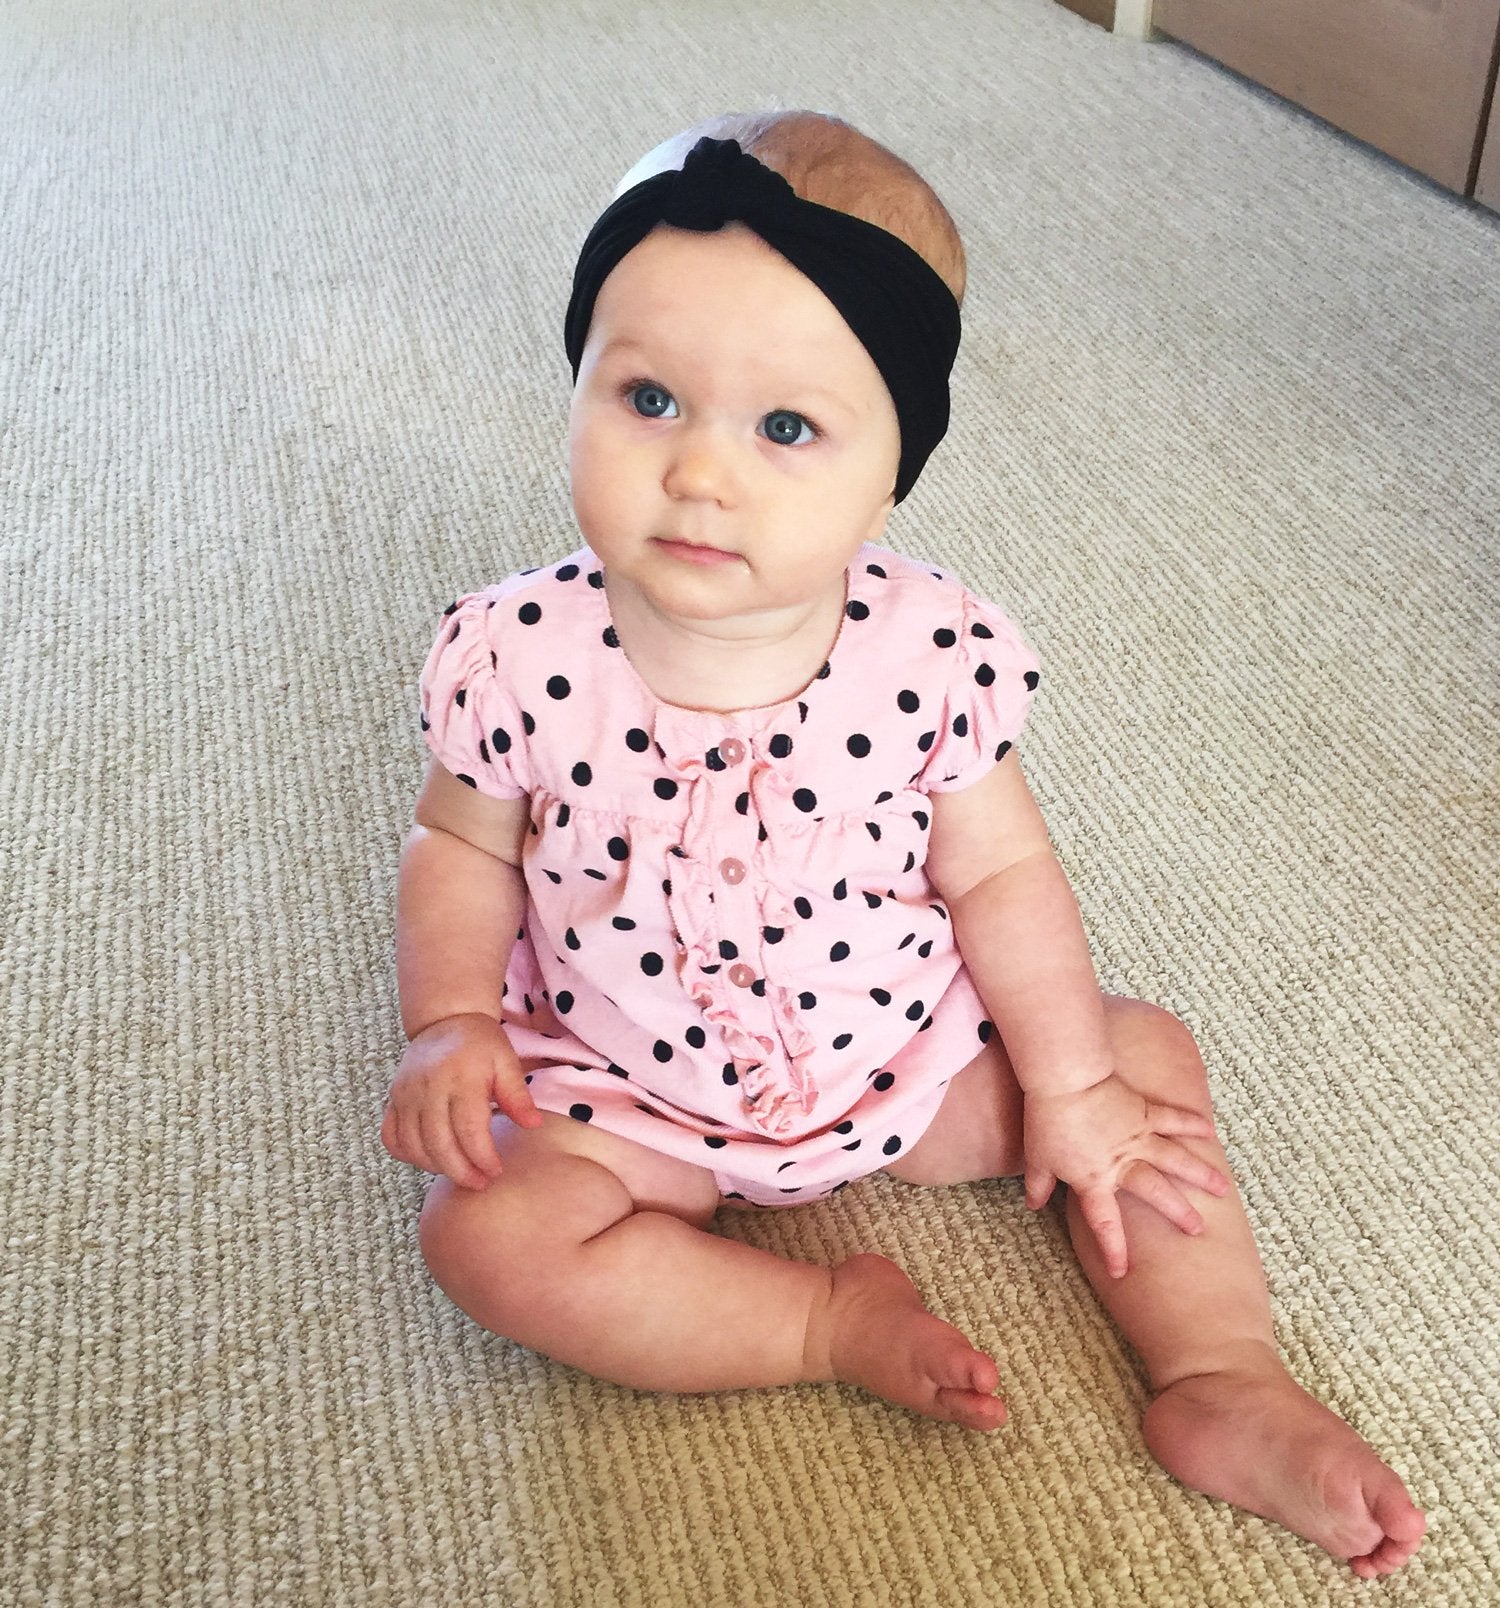 Infant Headwrap - Turban Knotted Nylon Headband - Golden Mustard Baby Wisp